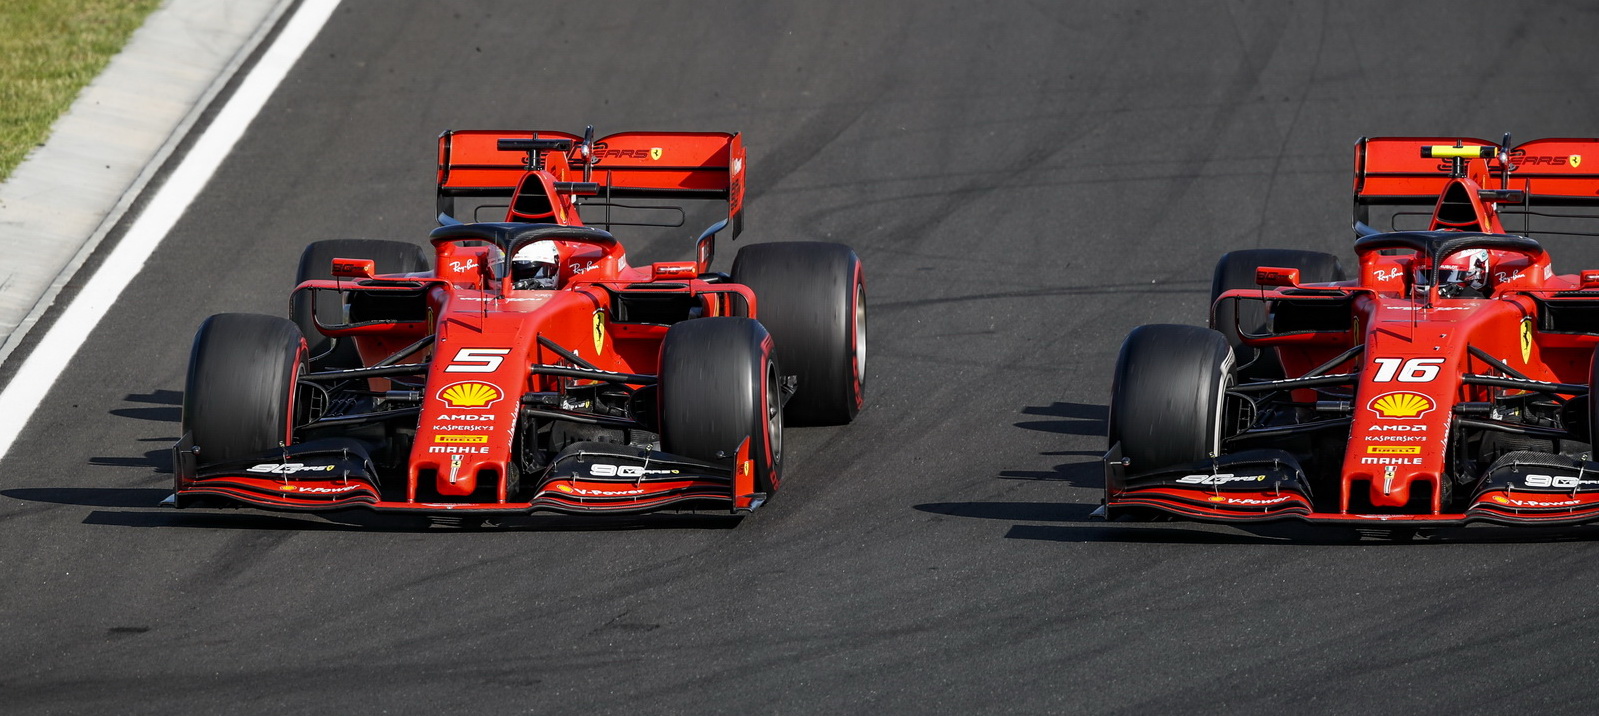 Vettel pass on Leclerc